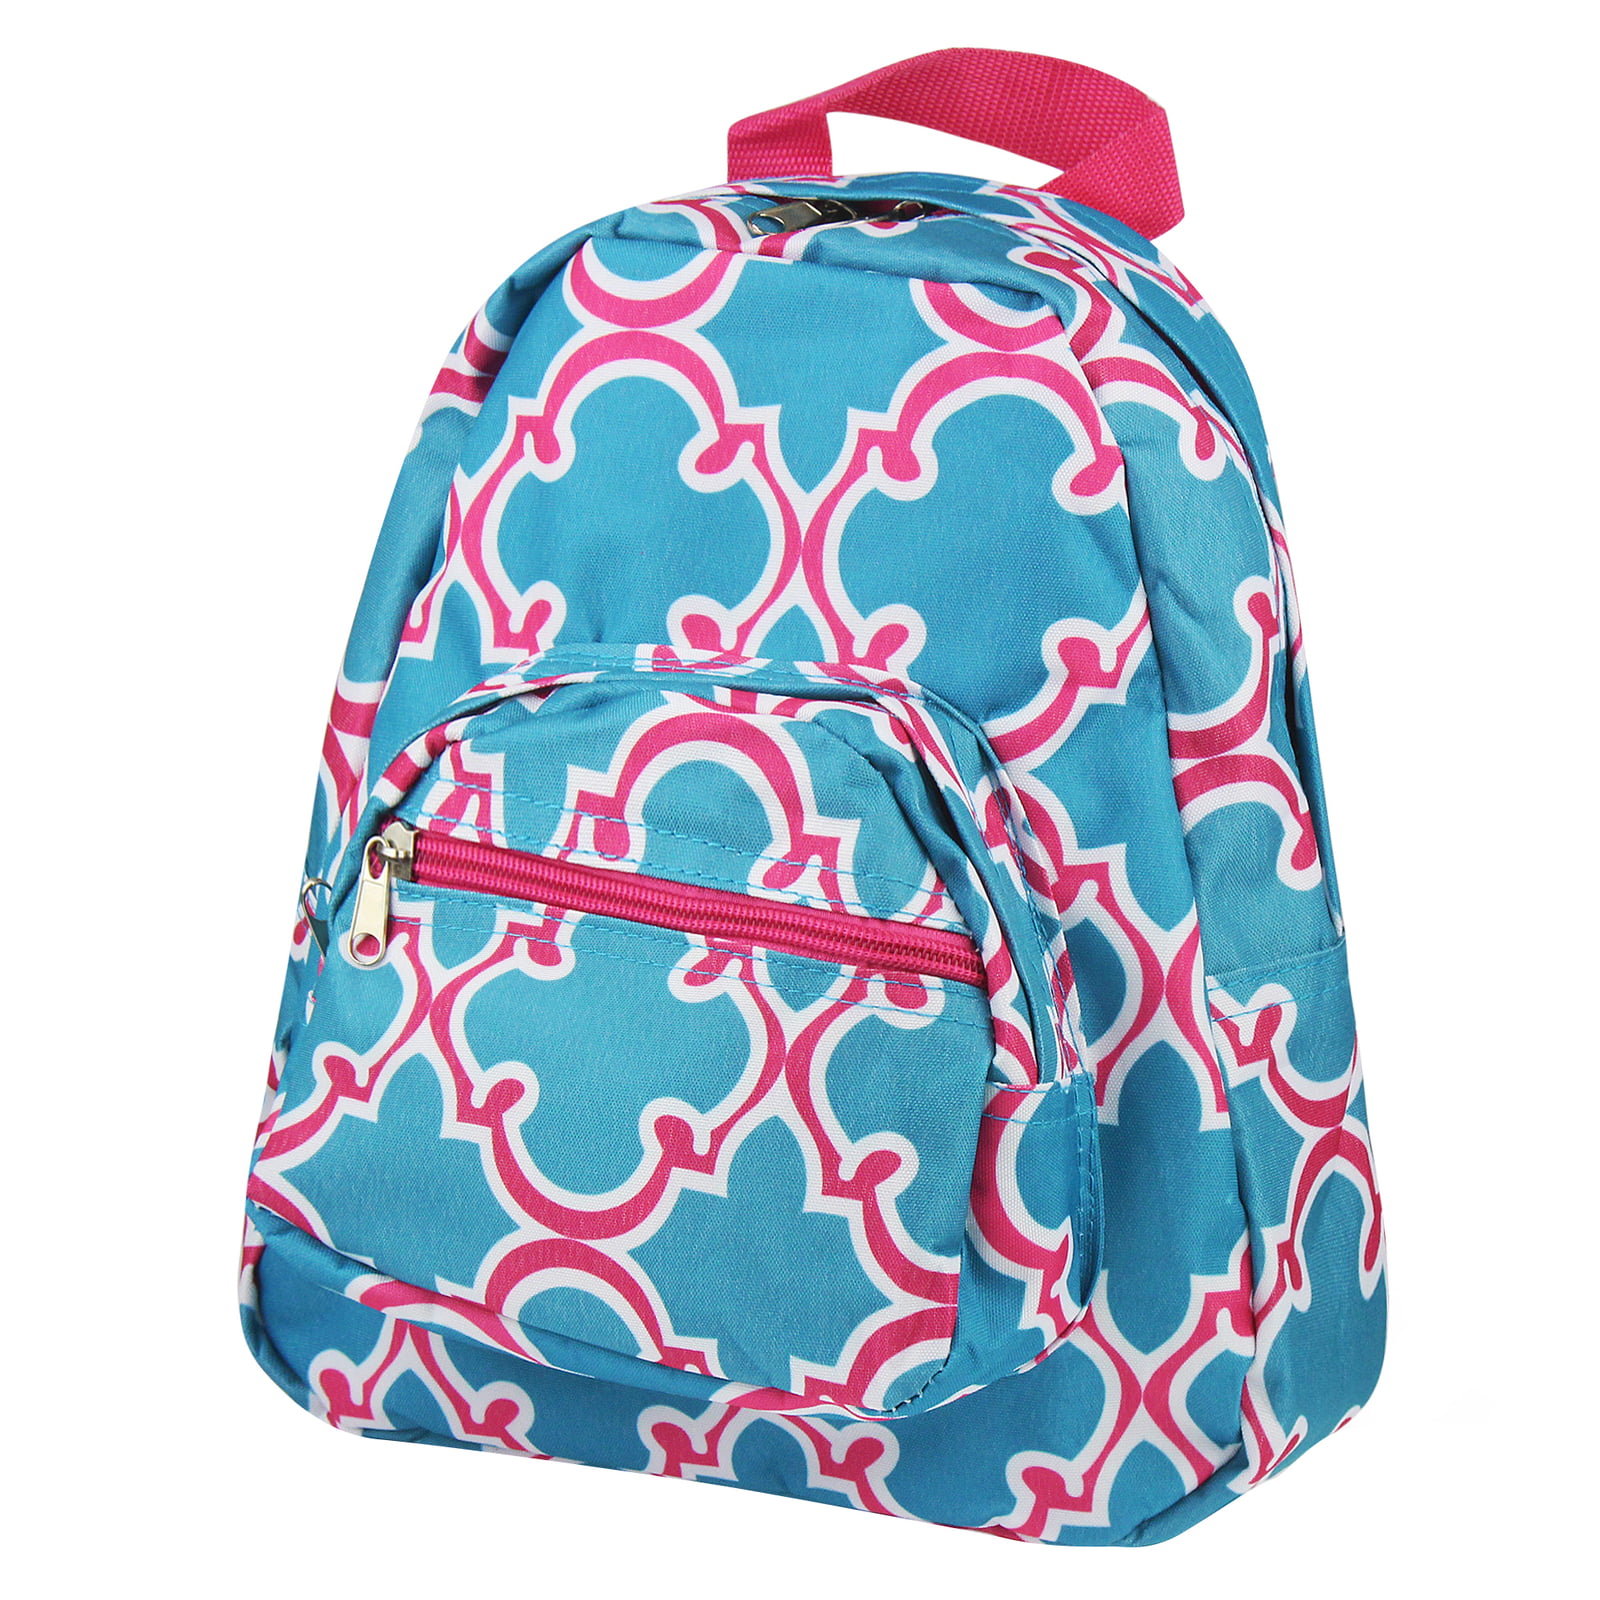 Zodaca Bright Stylish Kids Small Backpack Outdoor Shoulder School ...